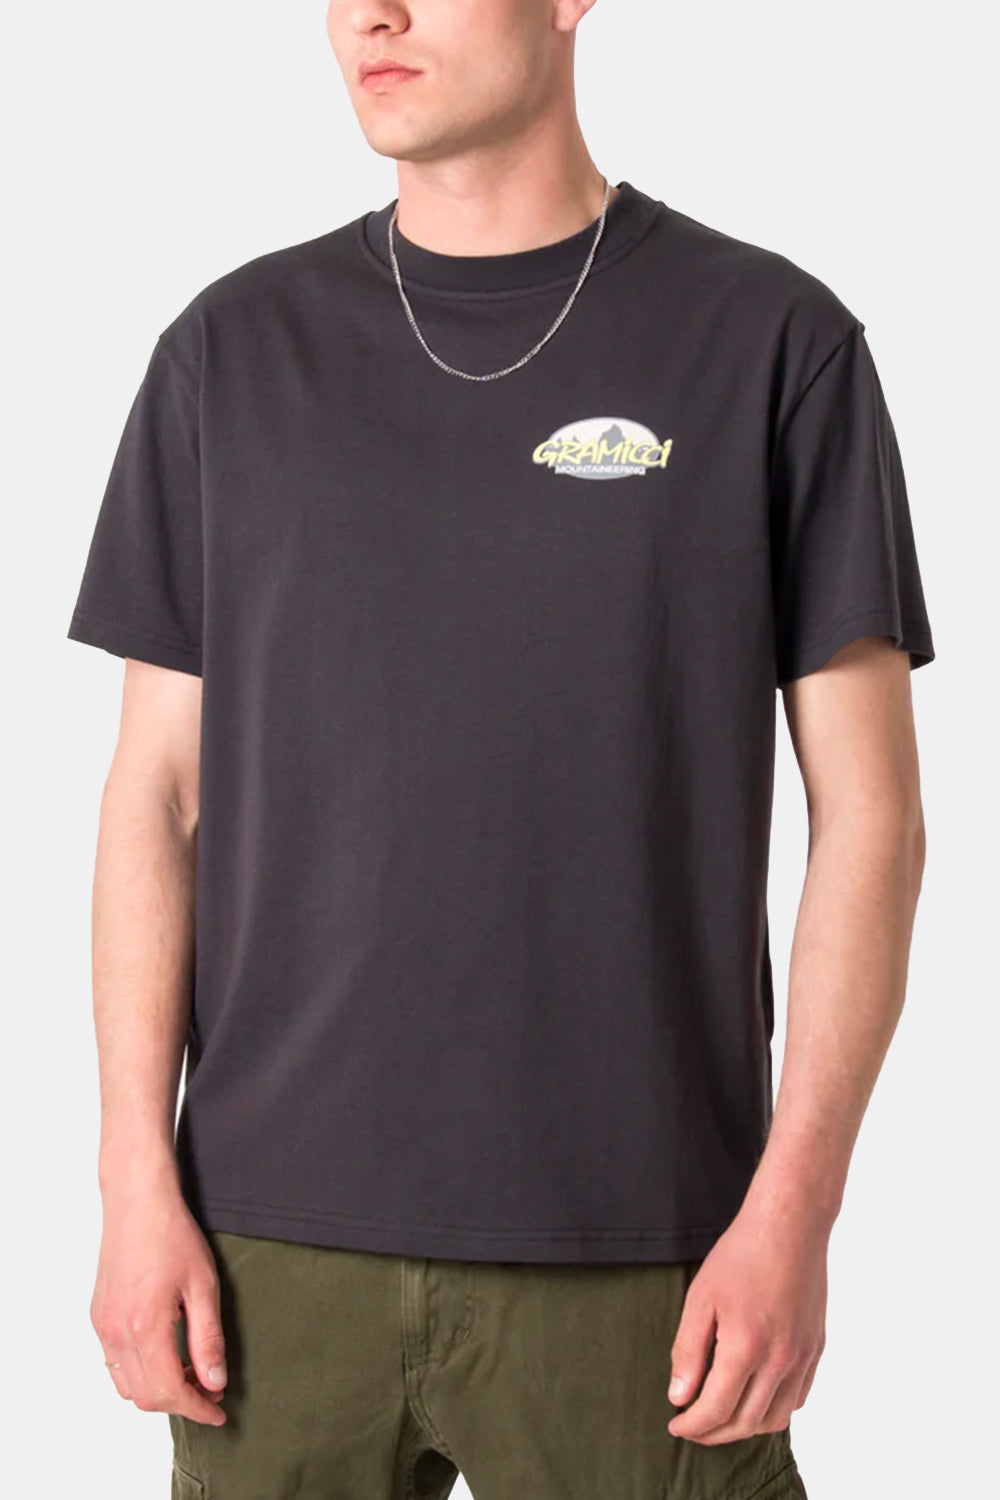 Gramicci Summit Vintage T-Shirt (Black)